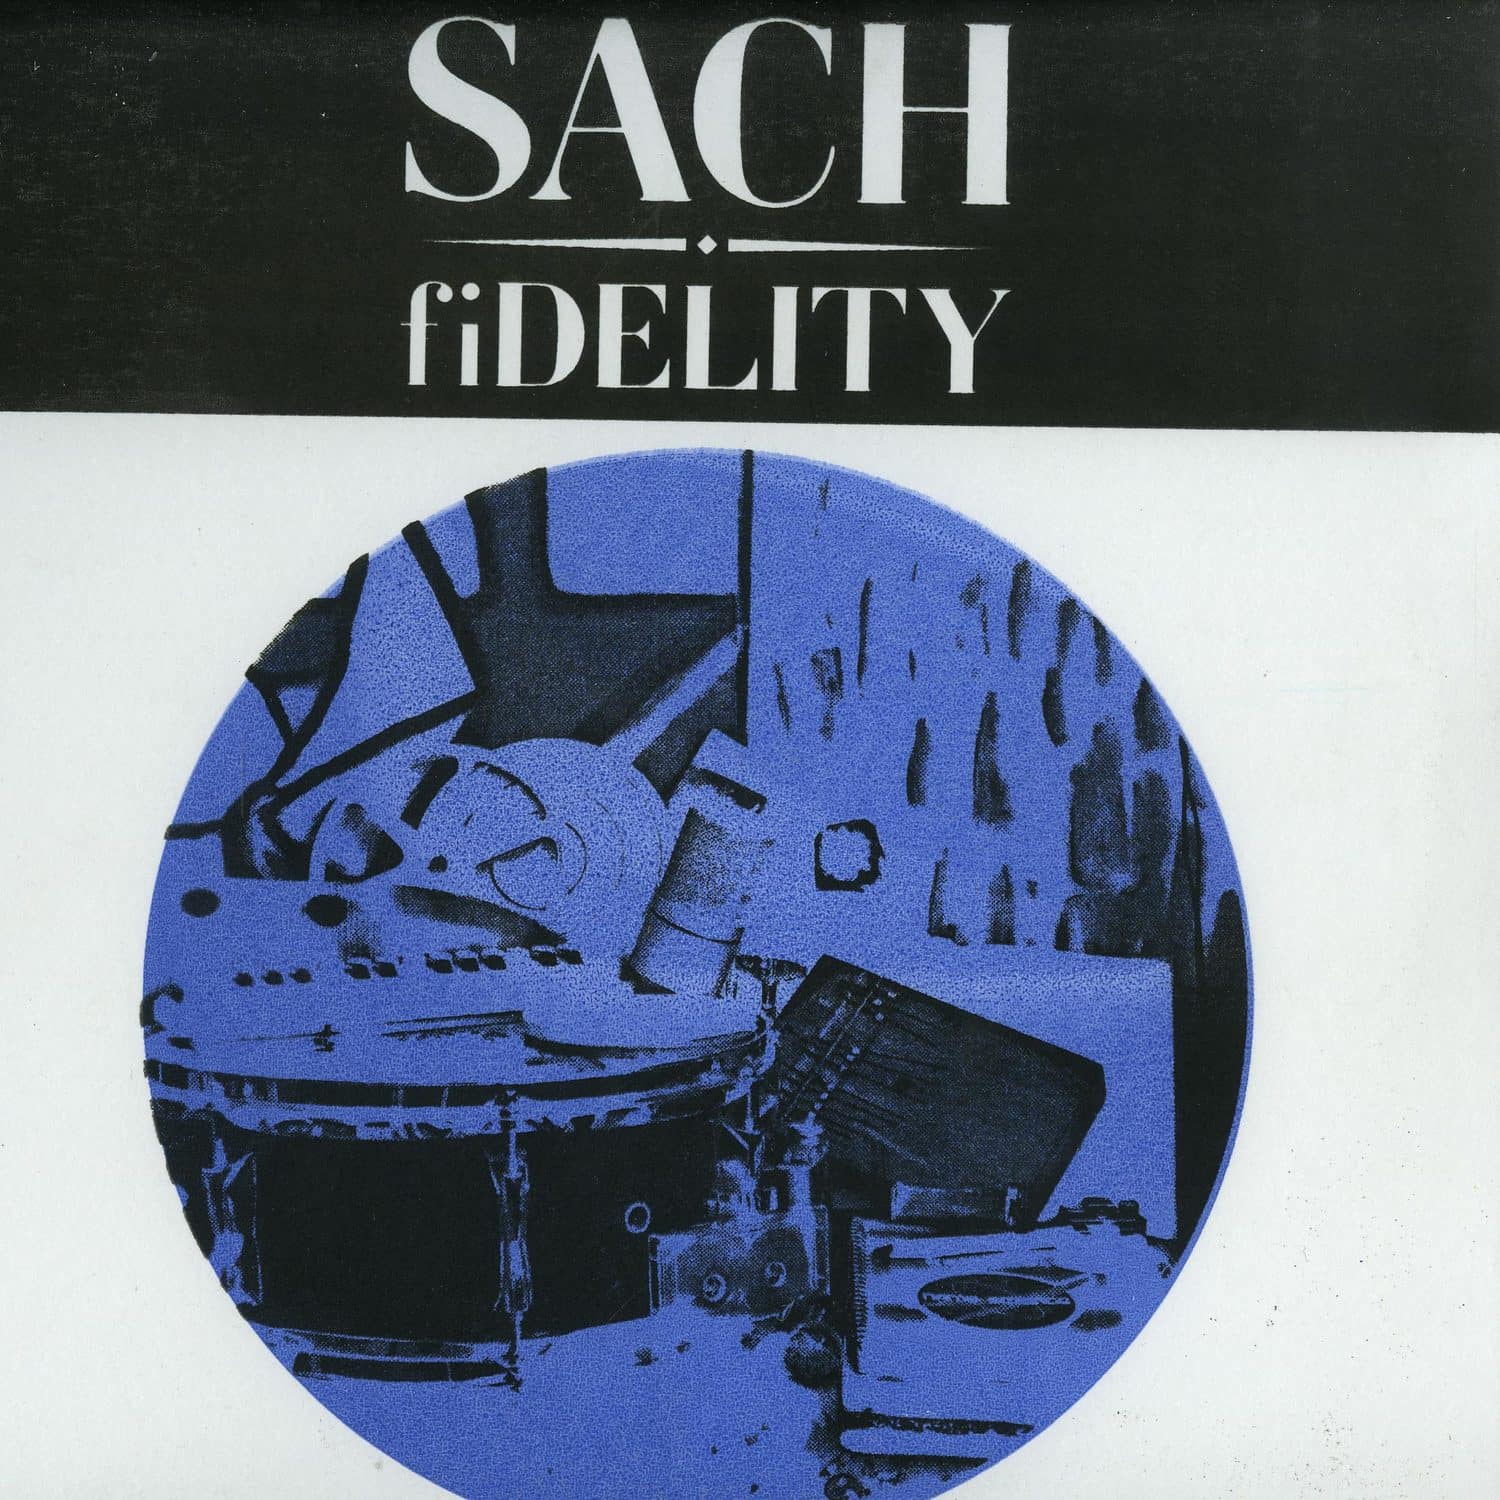 Sach - FIDELITY 